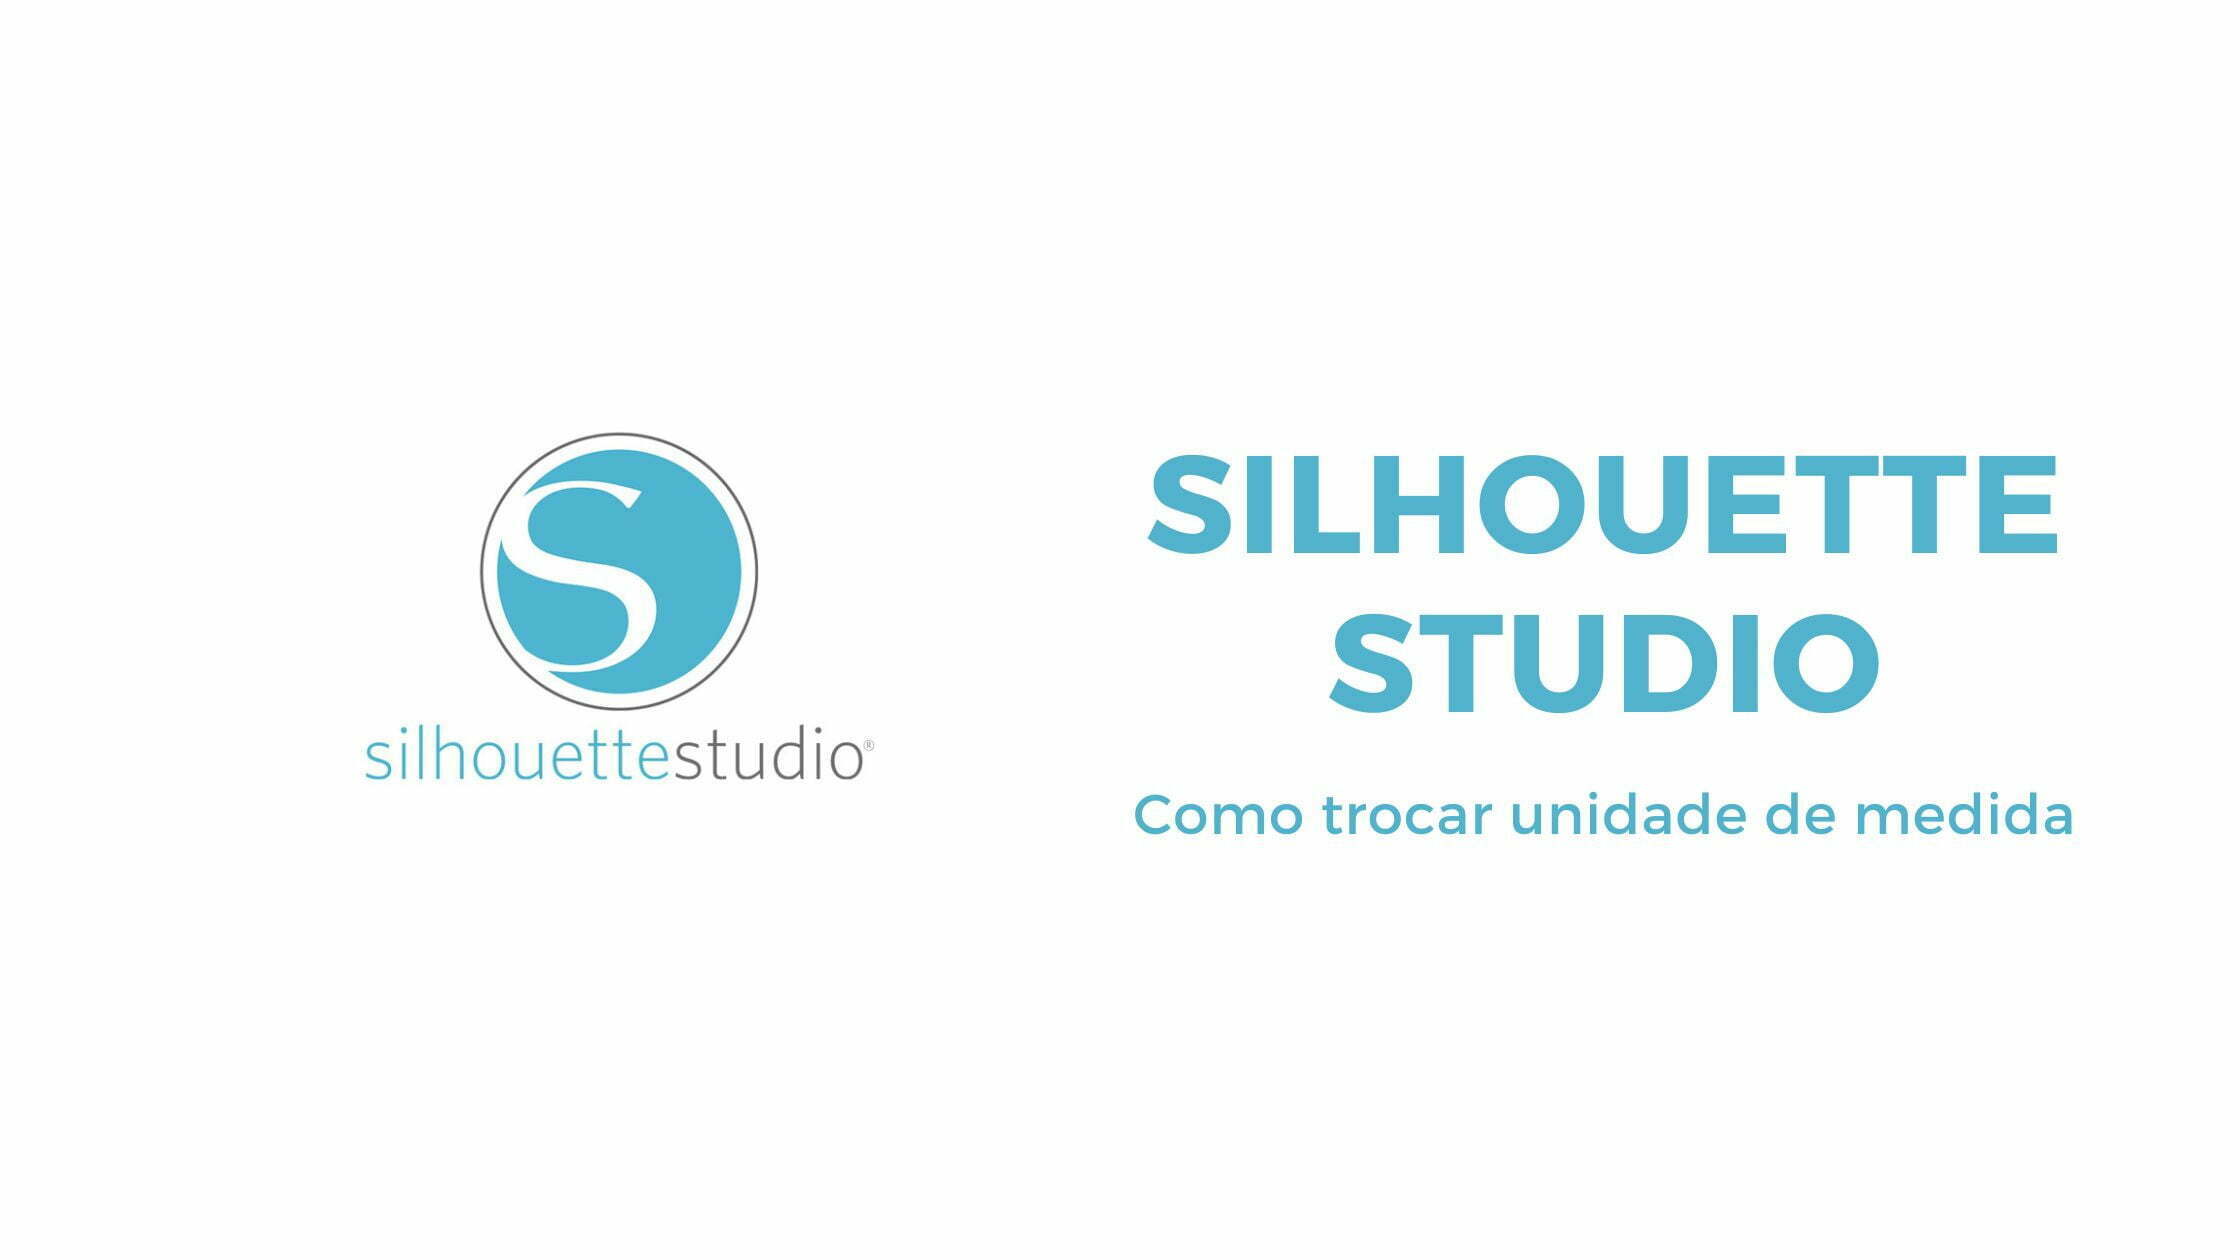 silhouette-studio-unidade-de-medida